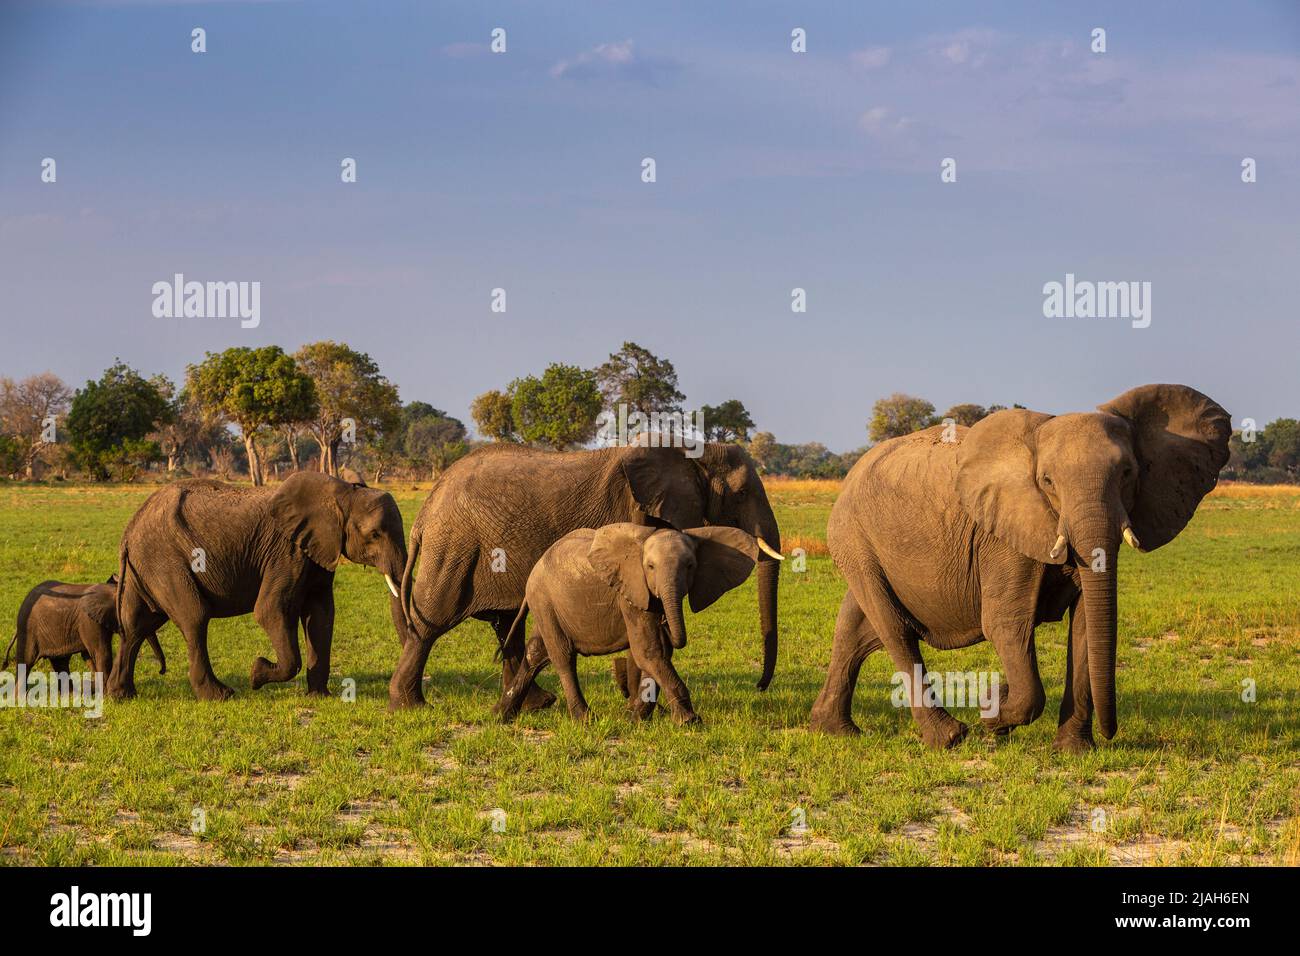 Elephants of the Okavango Delta grassland, Botswana Stock Photo